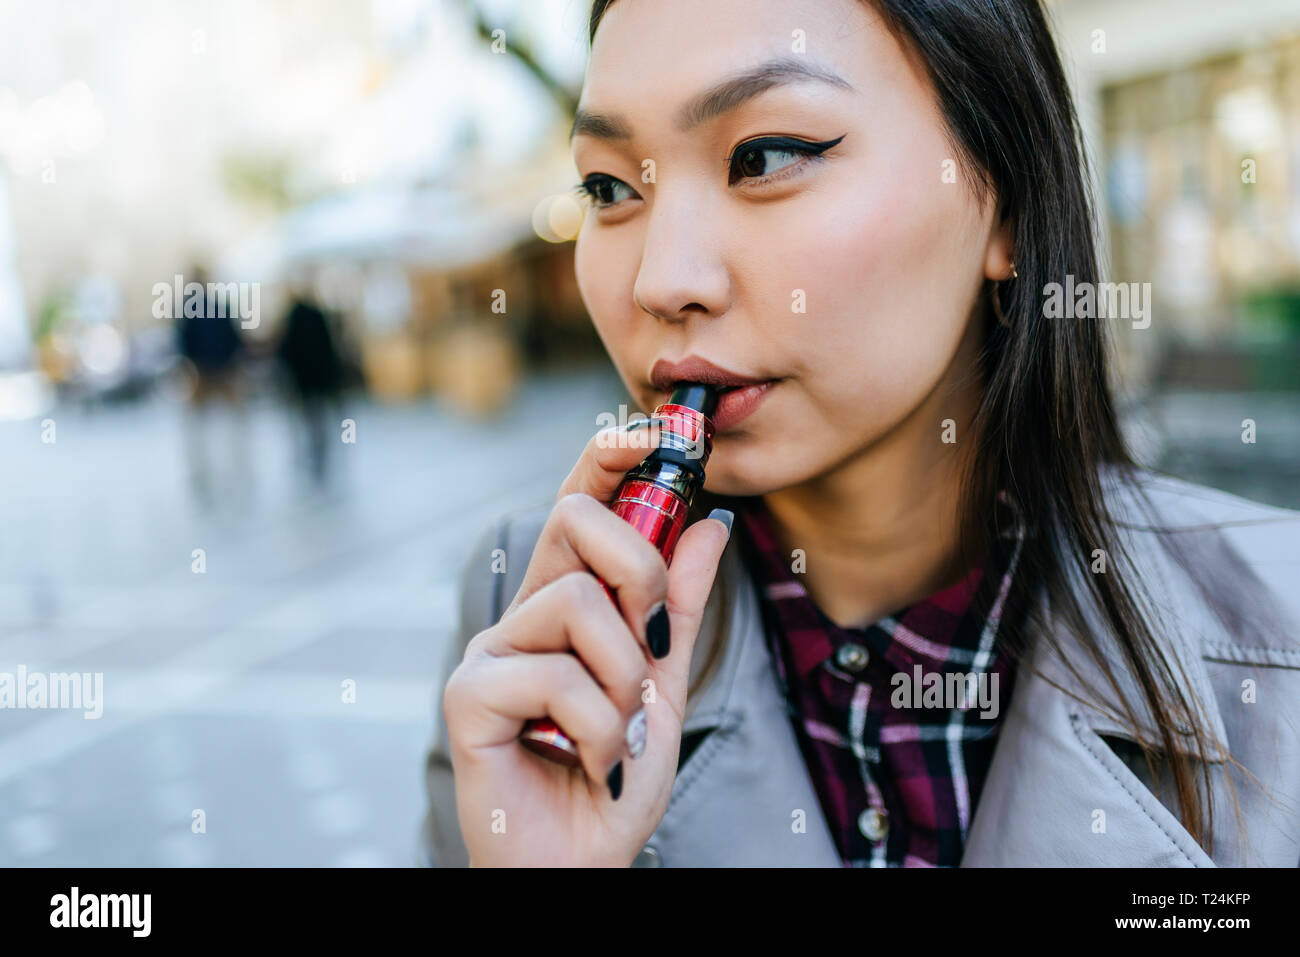 Young woman smoking electronic cigarette Stock Photo